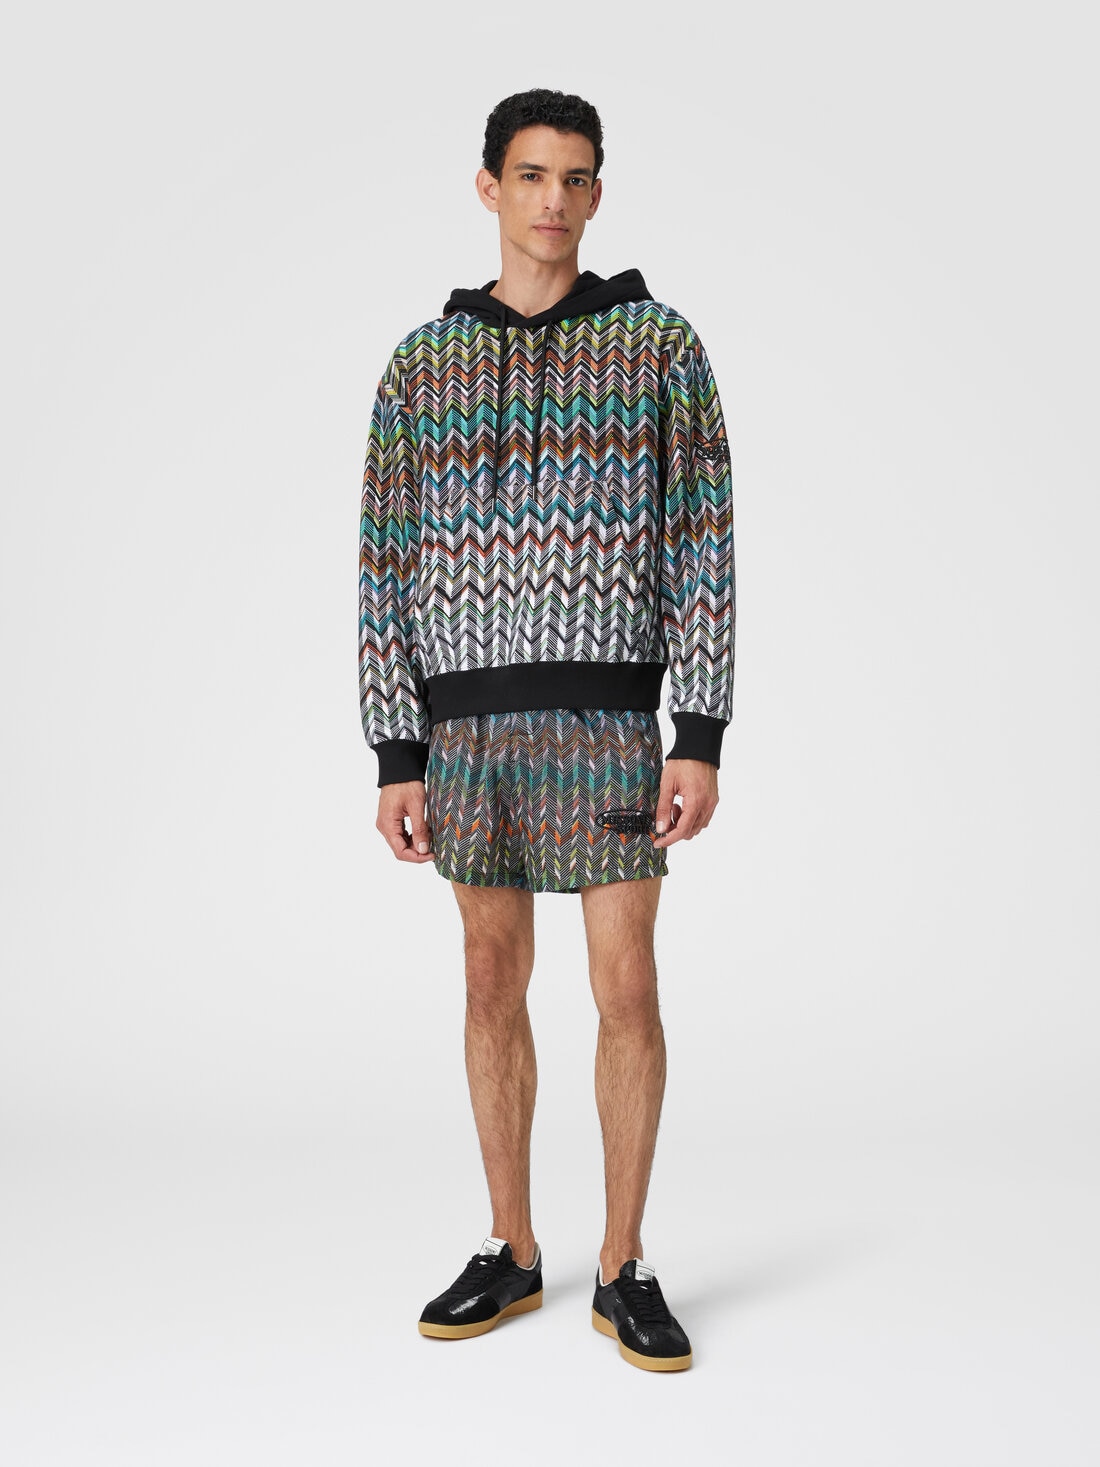 Hooded sweatshirt in zigzag knit , Multicoloured  - TS24SW05BC0047S91J3 - 1